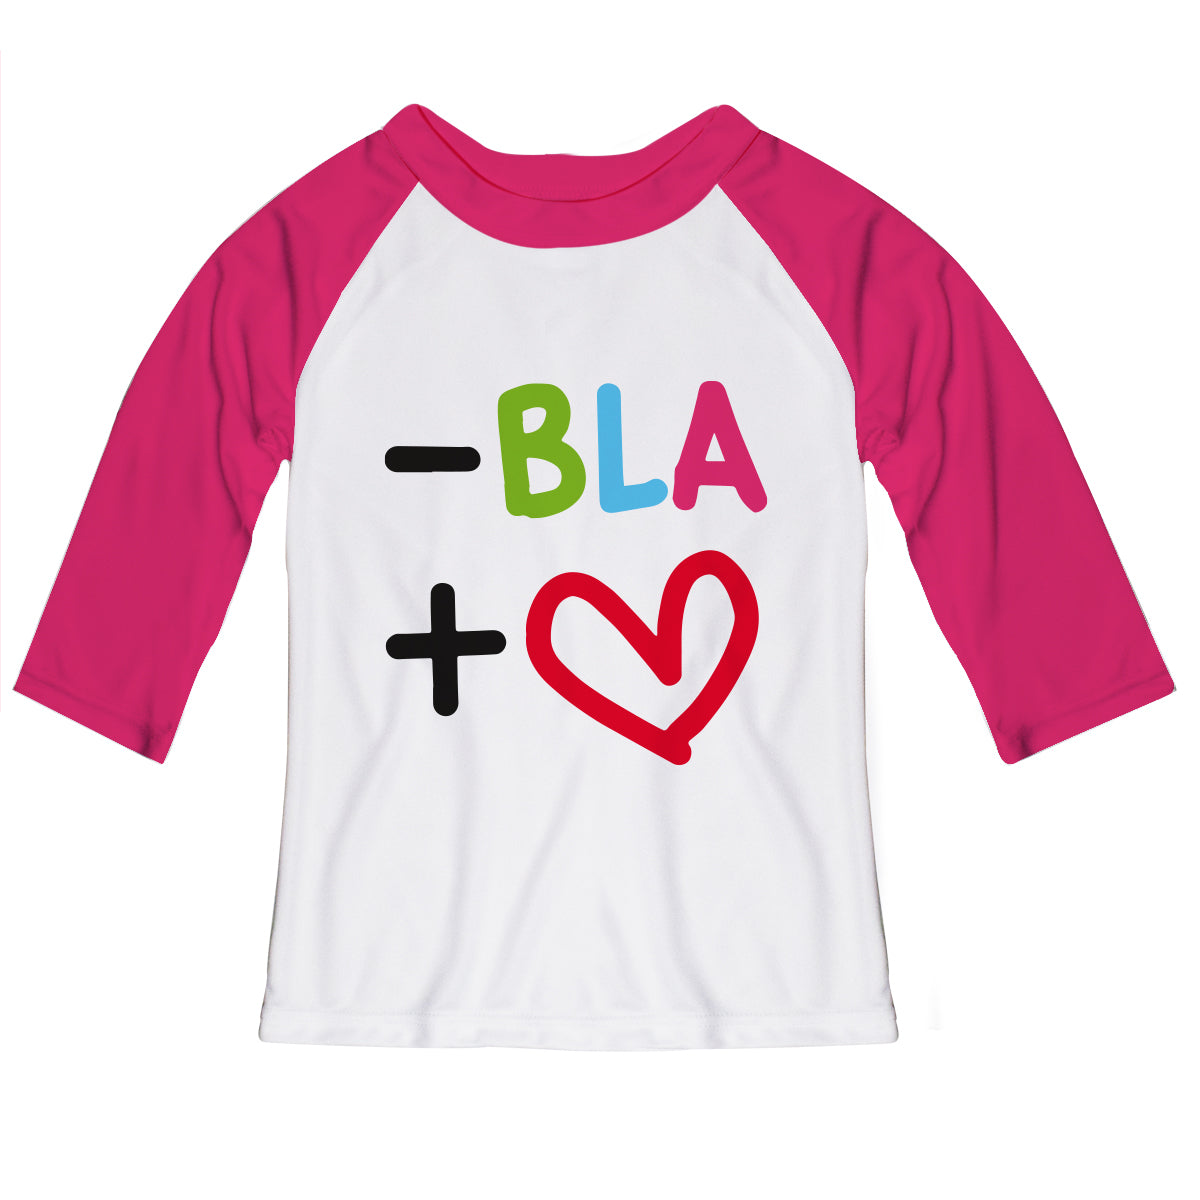 Less Blah More Love White and Pink Raglan Tee Shirt 3/4 Sleeve